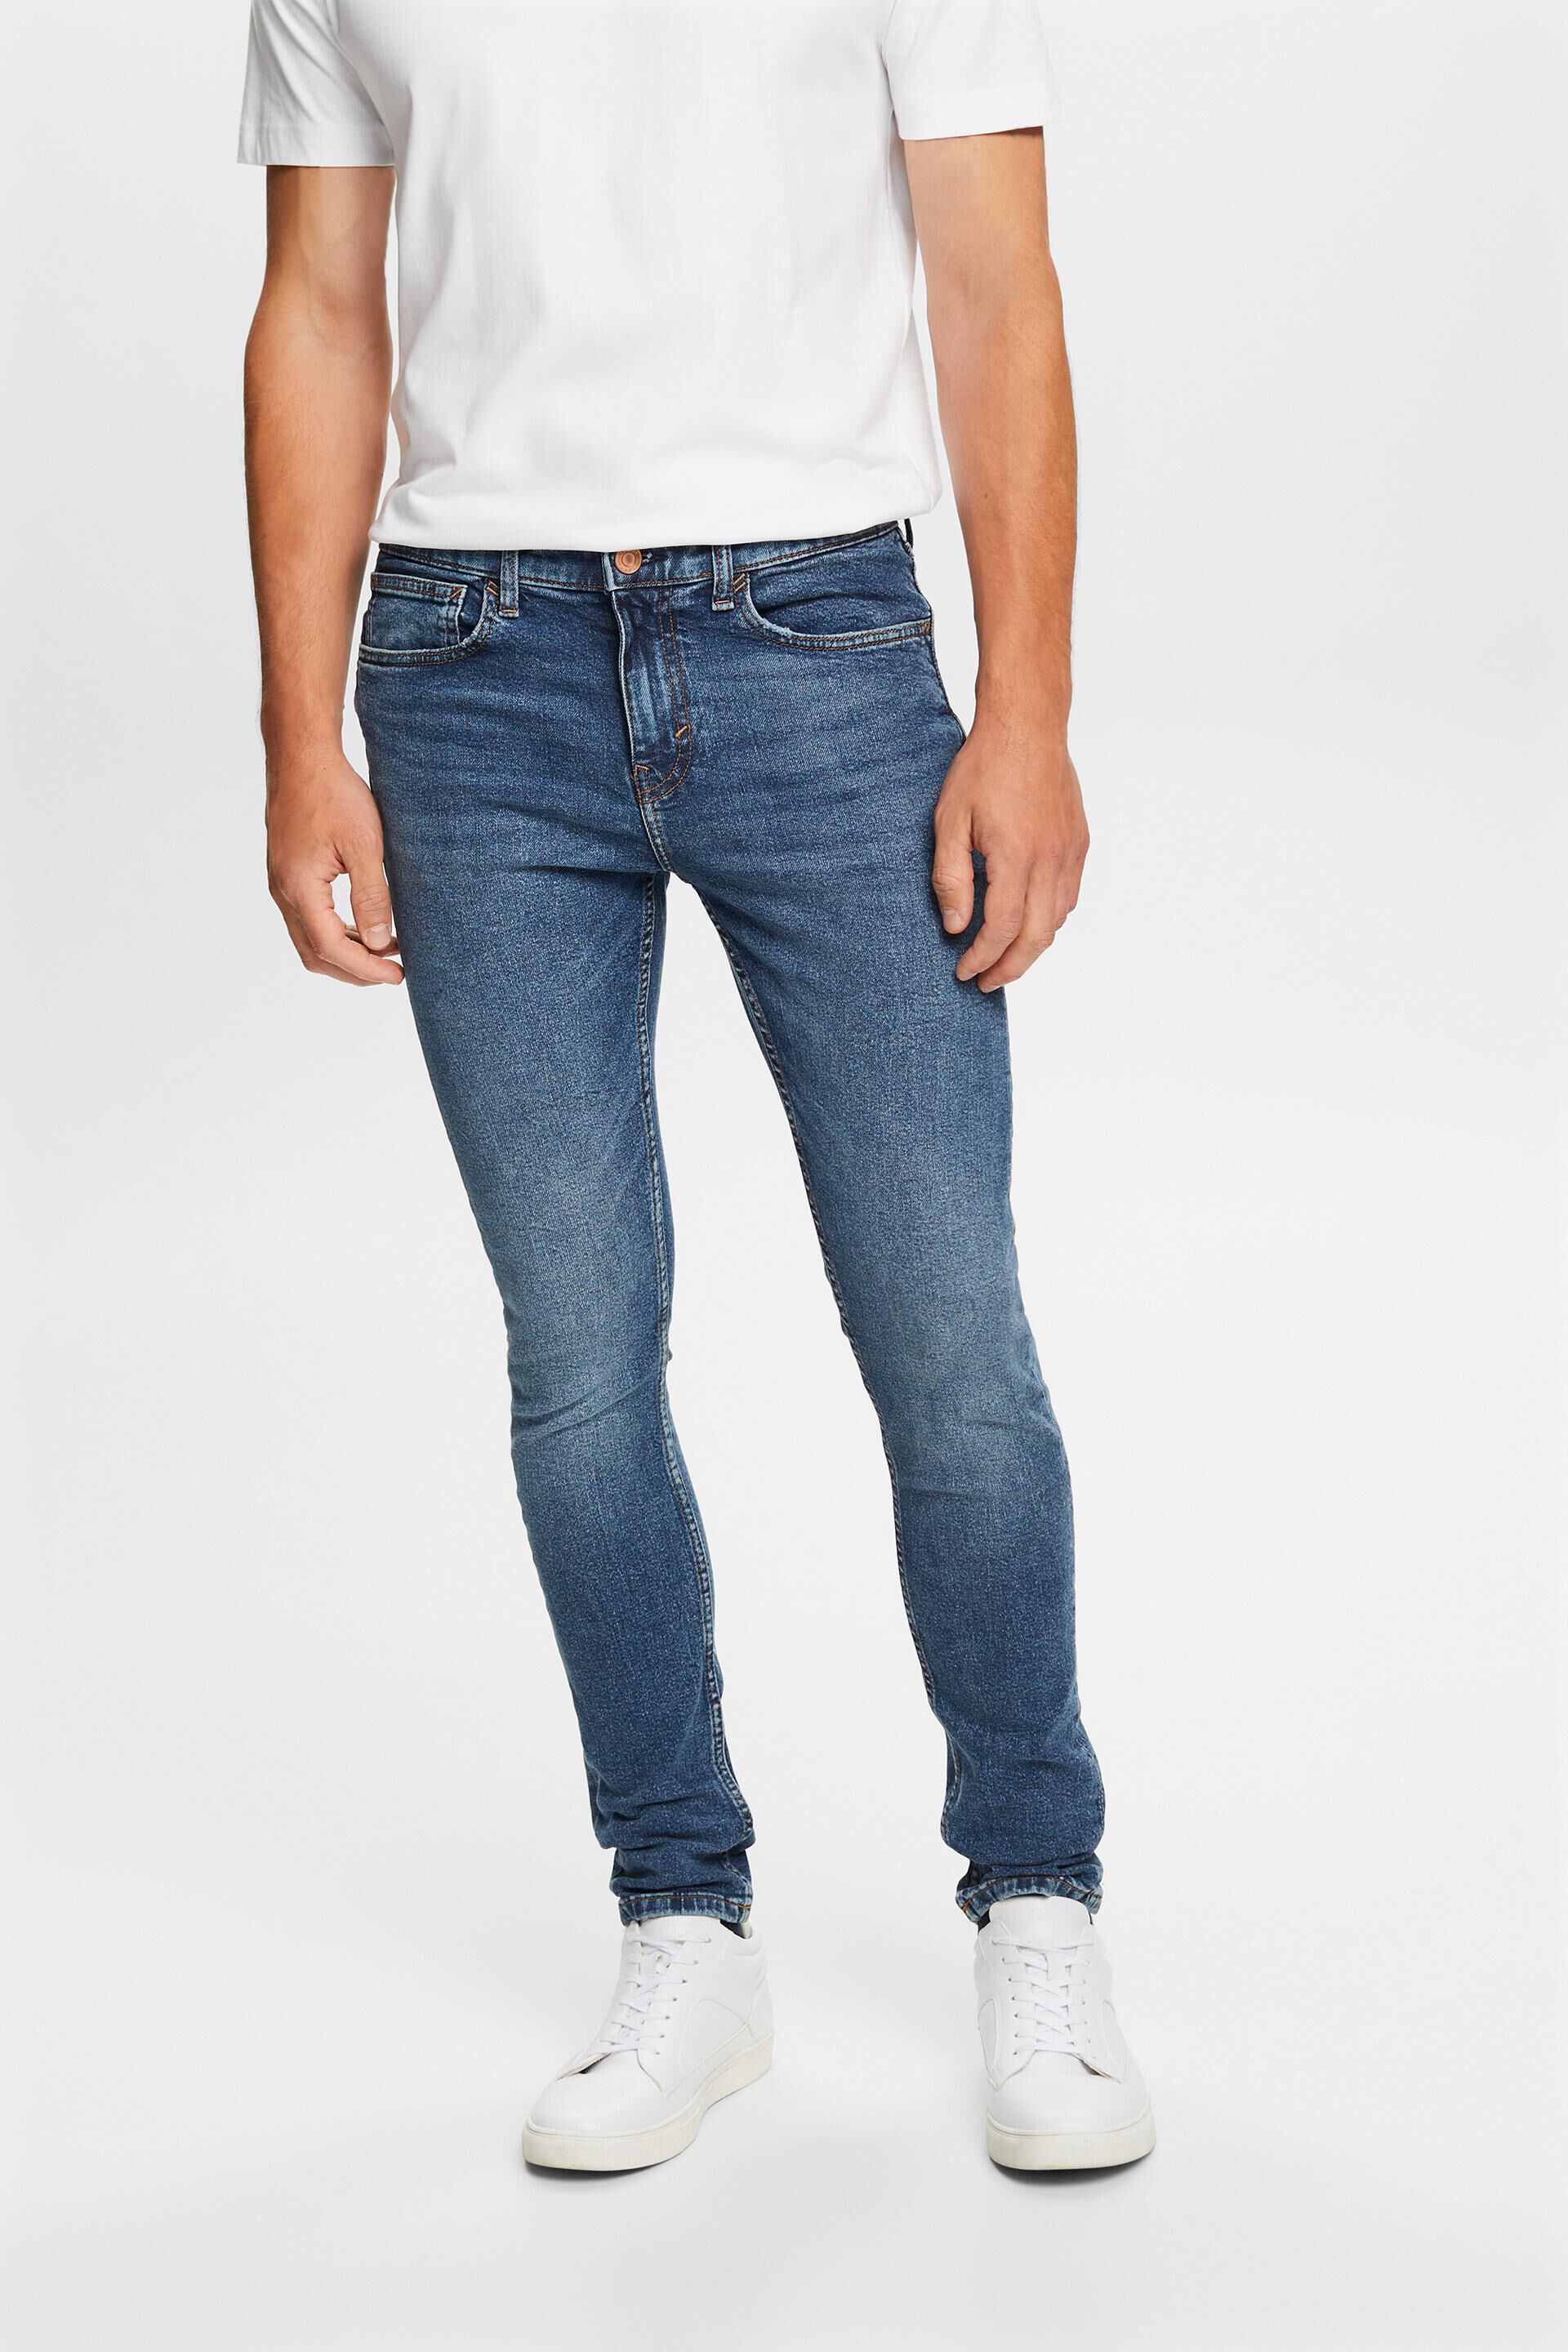 Esprit Jeans Mid-Rise Skinny